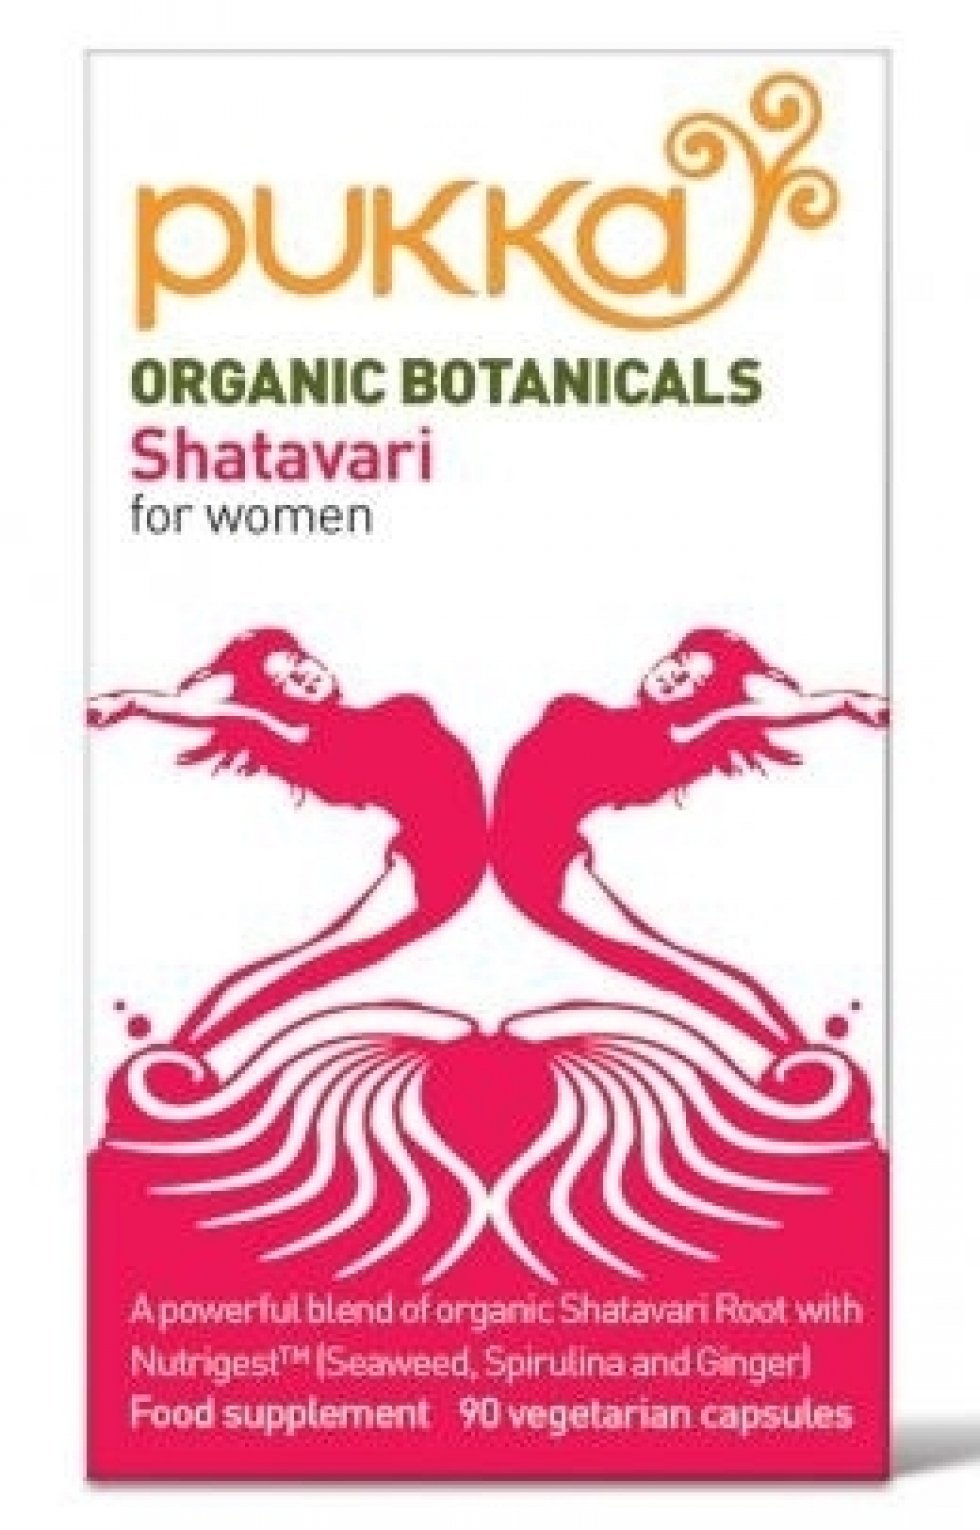 Pukka Organic Botanicals